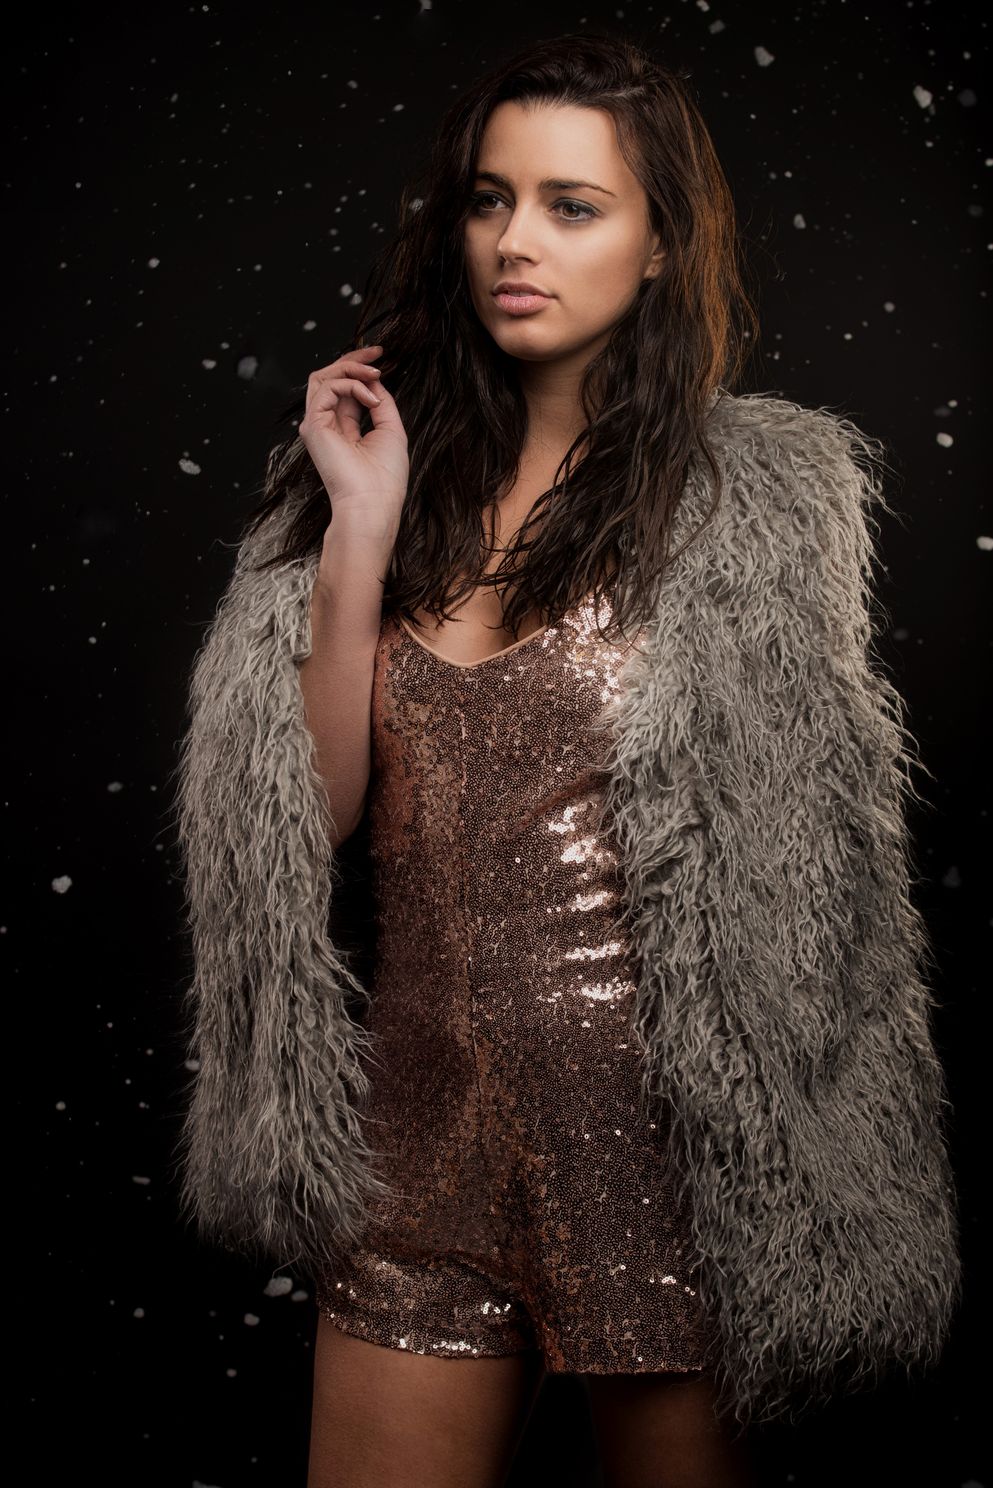 Model in studio lighting wearing fancy dress and fur coat, snow falling on a black background.